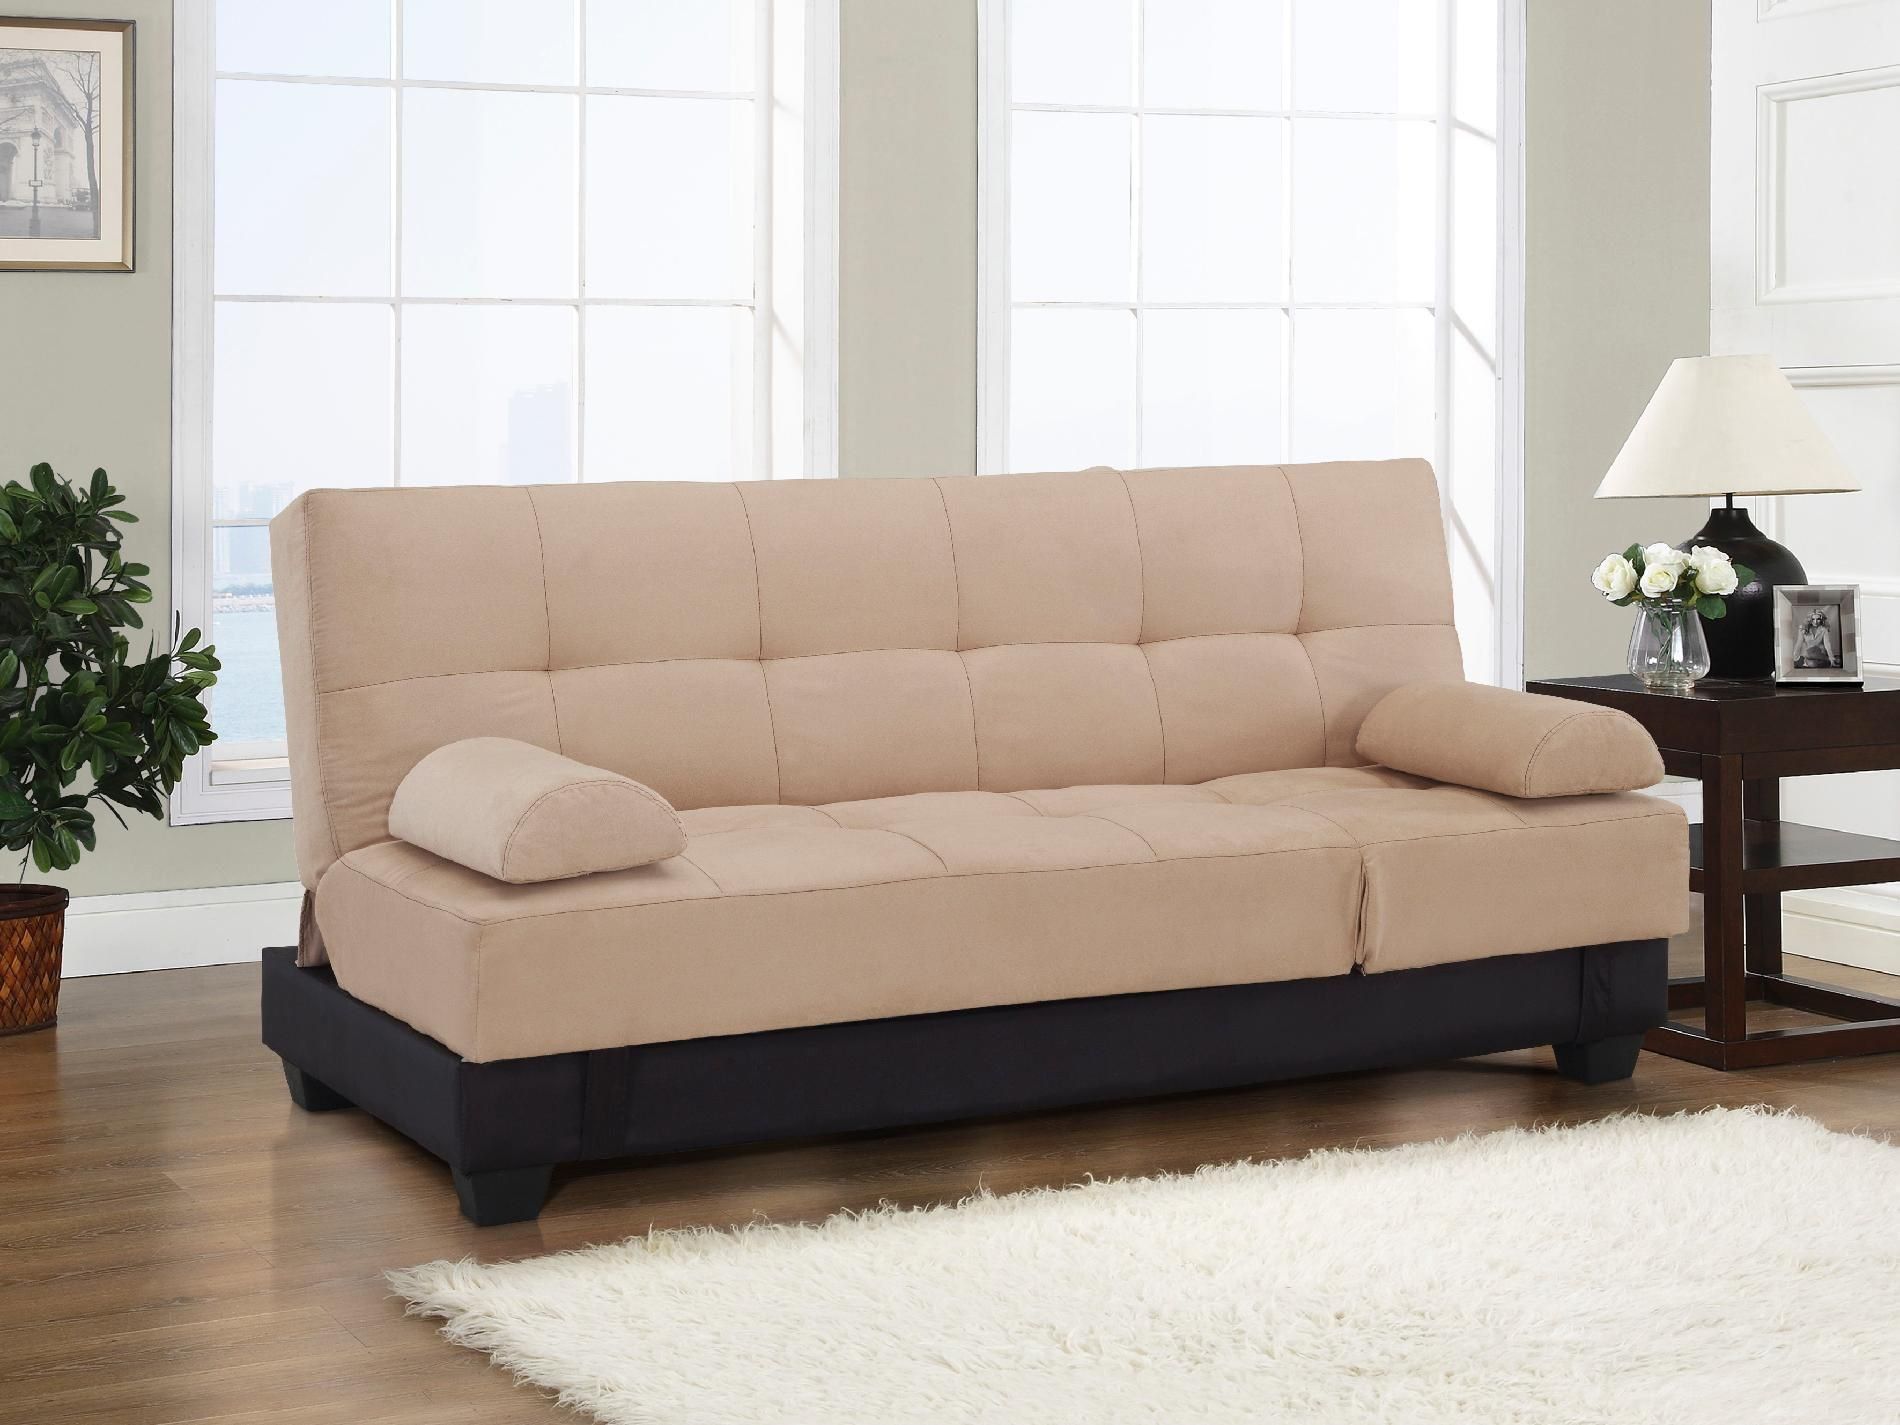 serta avanzo leather sleeper sofa